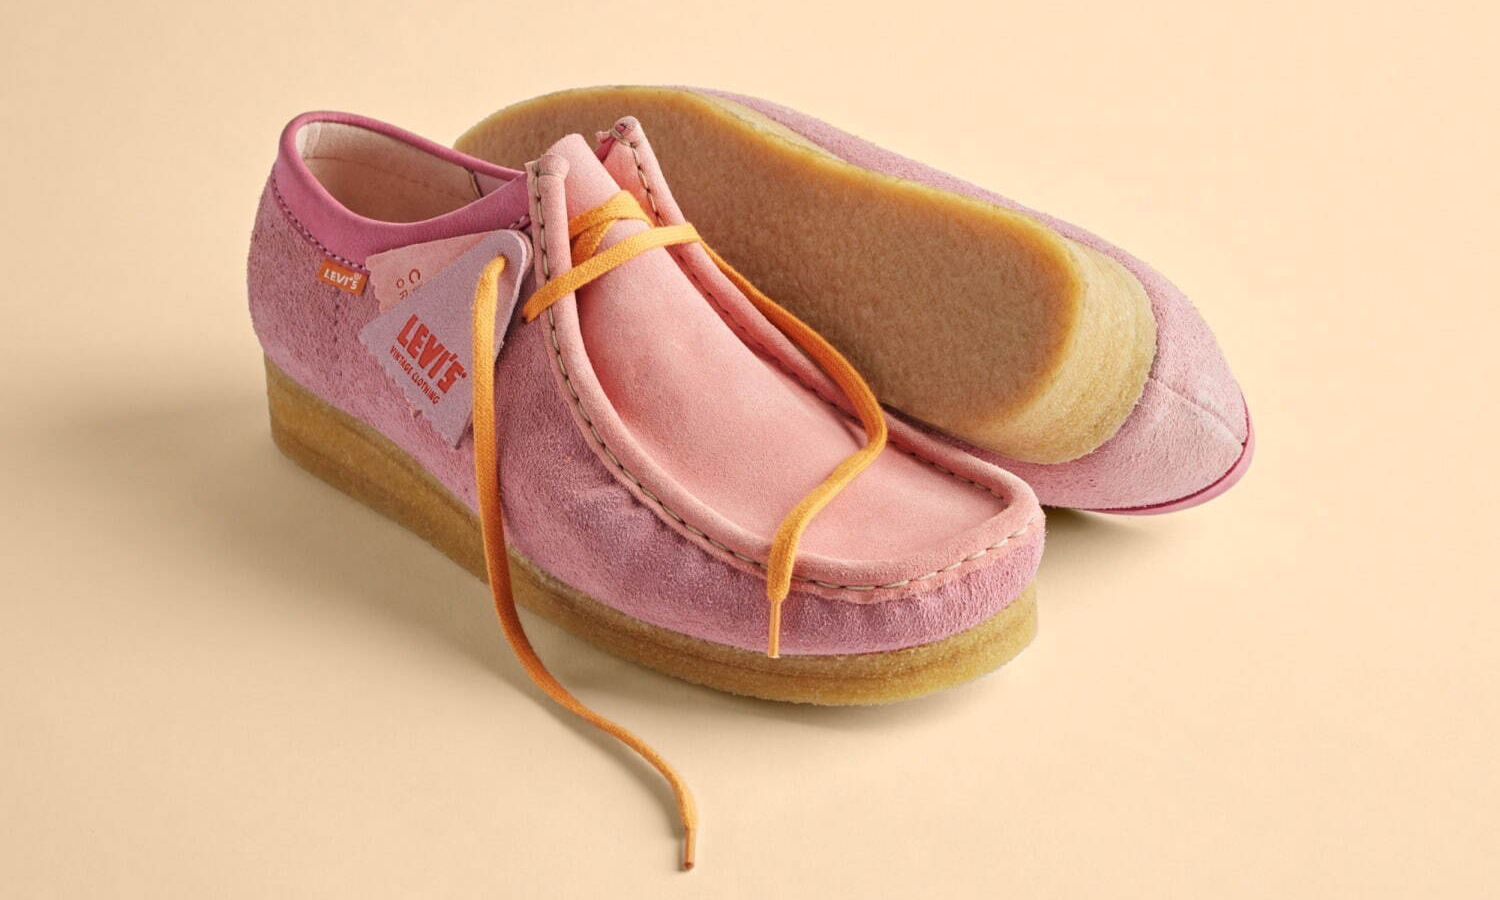 LVC 携手 Clarks Originals 推出全新合作鞋款